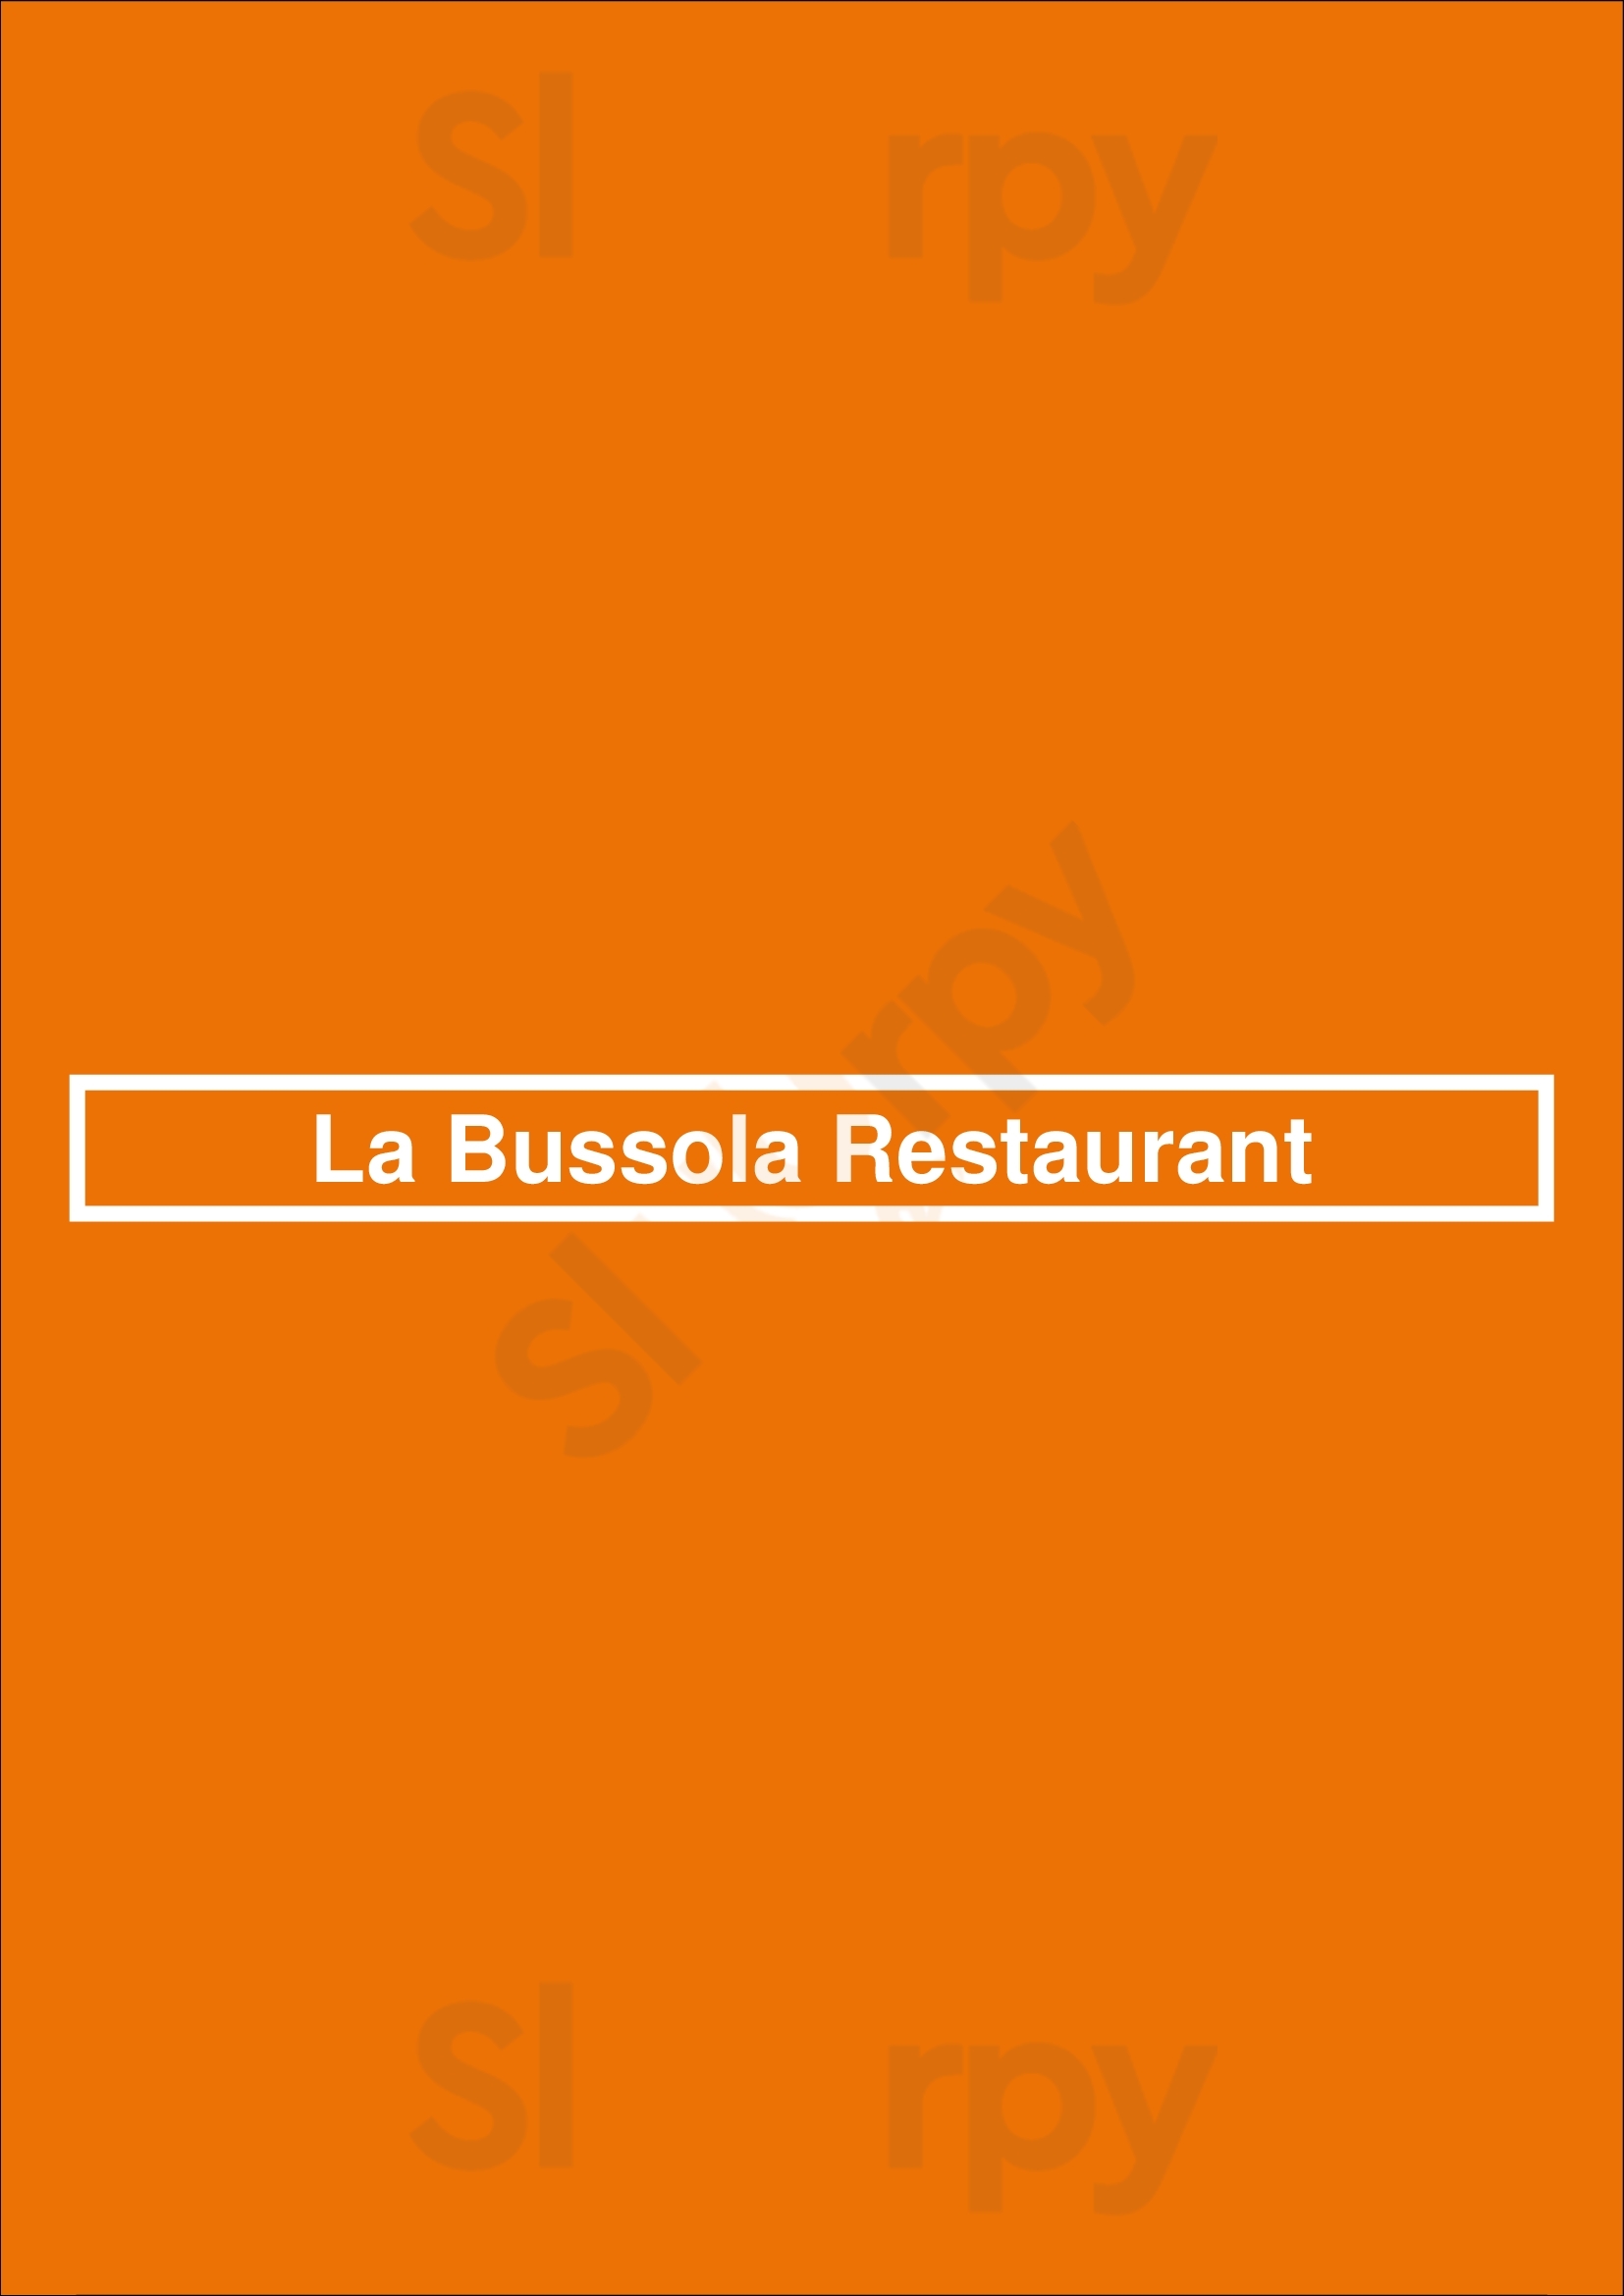 La Bussola Restaurant Kelowna Menu - 1